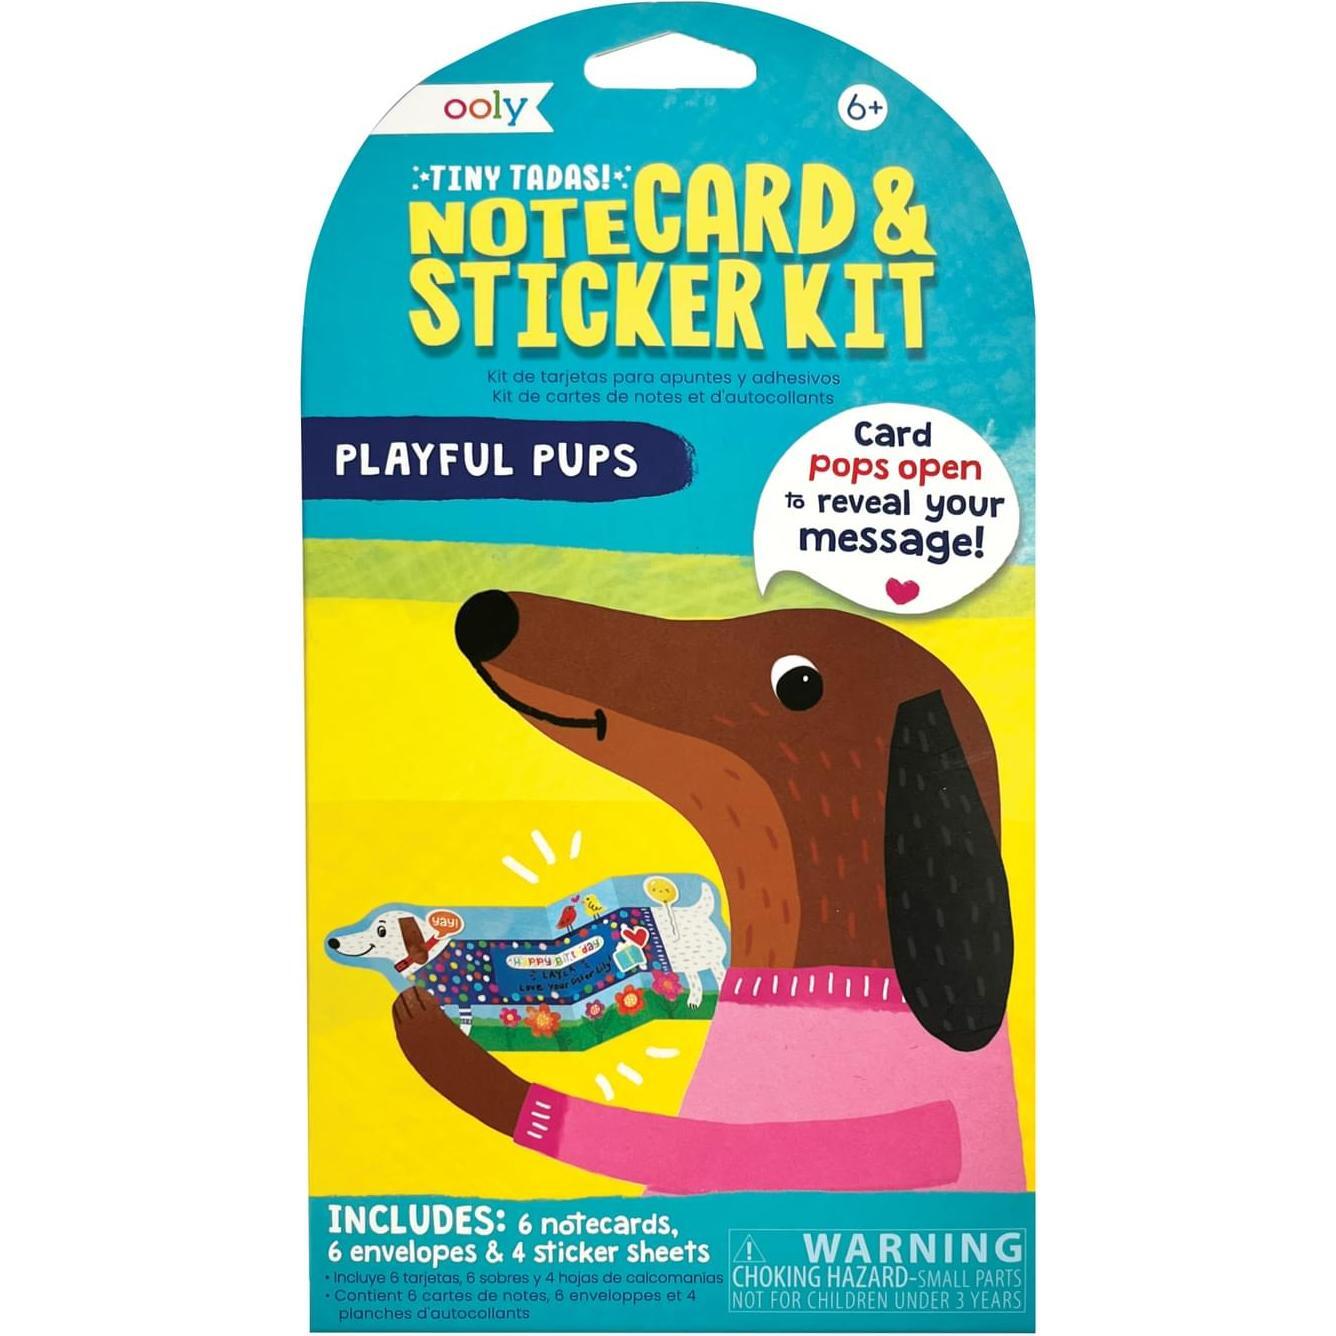 Playful Pups Scratch and Scribble Mini Scratch Art Kit